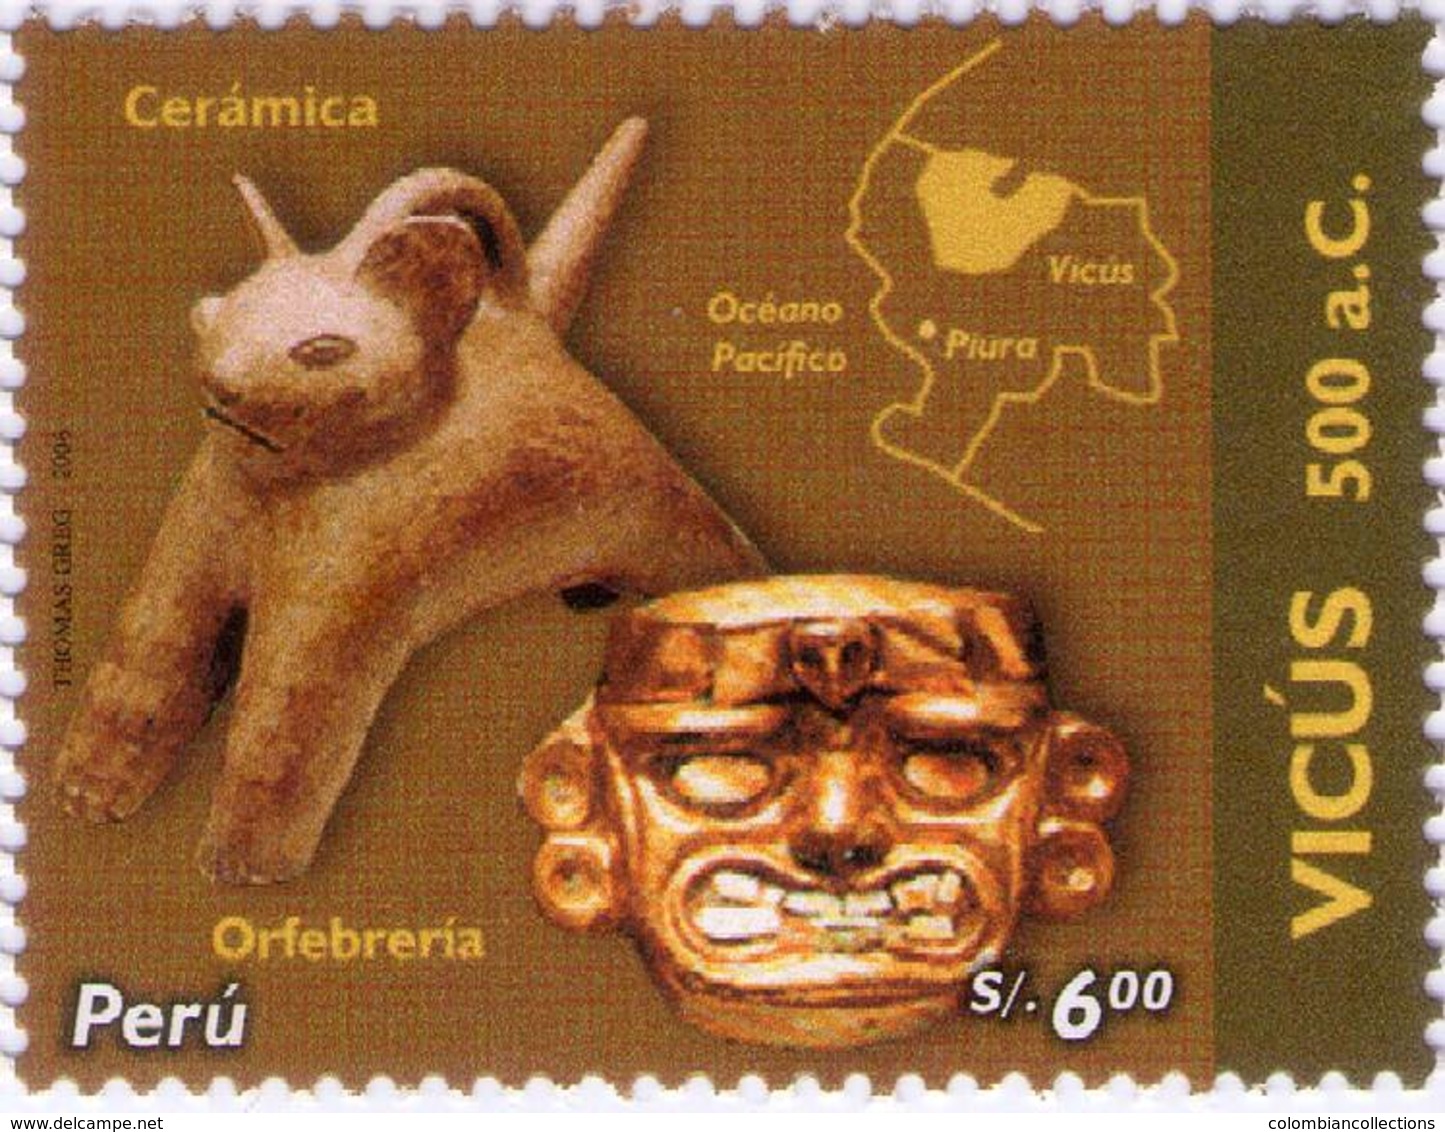 Lote P2006-13, Peru, 2006, Sello, Stamp, Vicus, Culturas Indigenas Peruanas, Indigenous Cultures - Peru